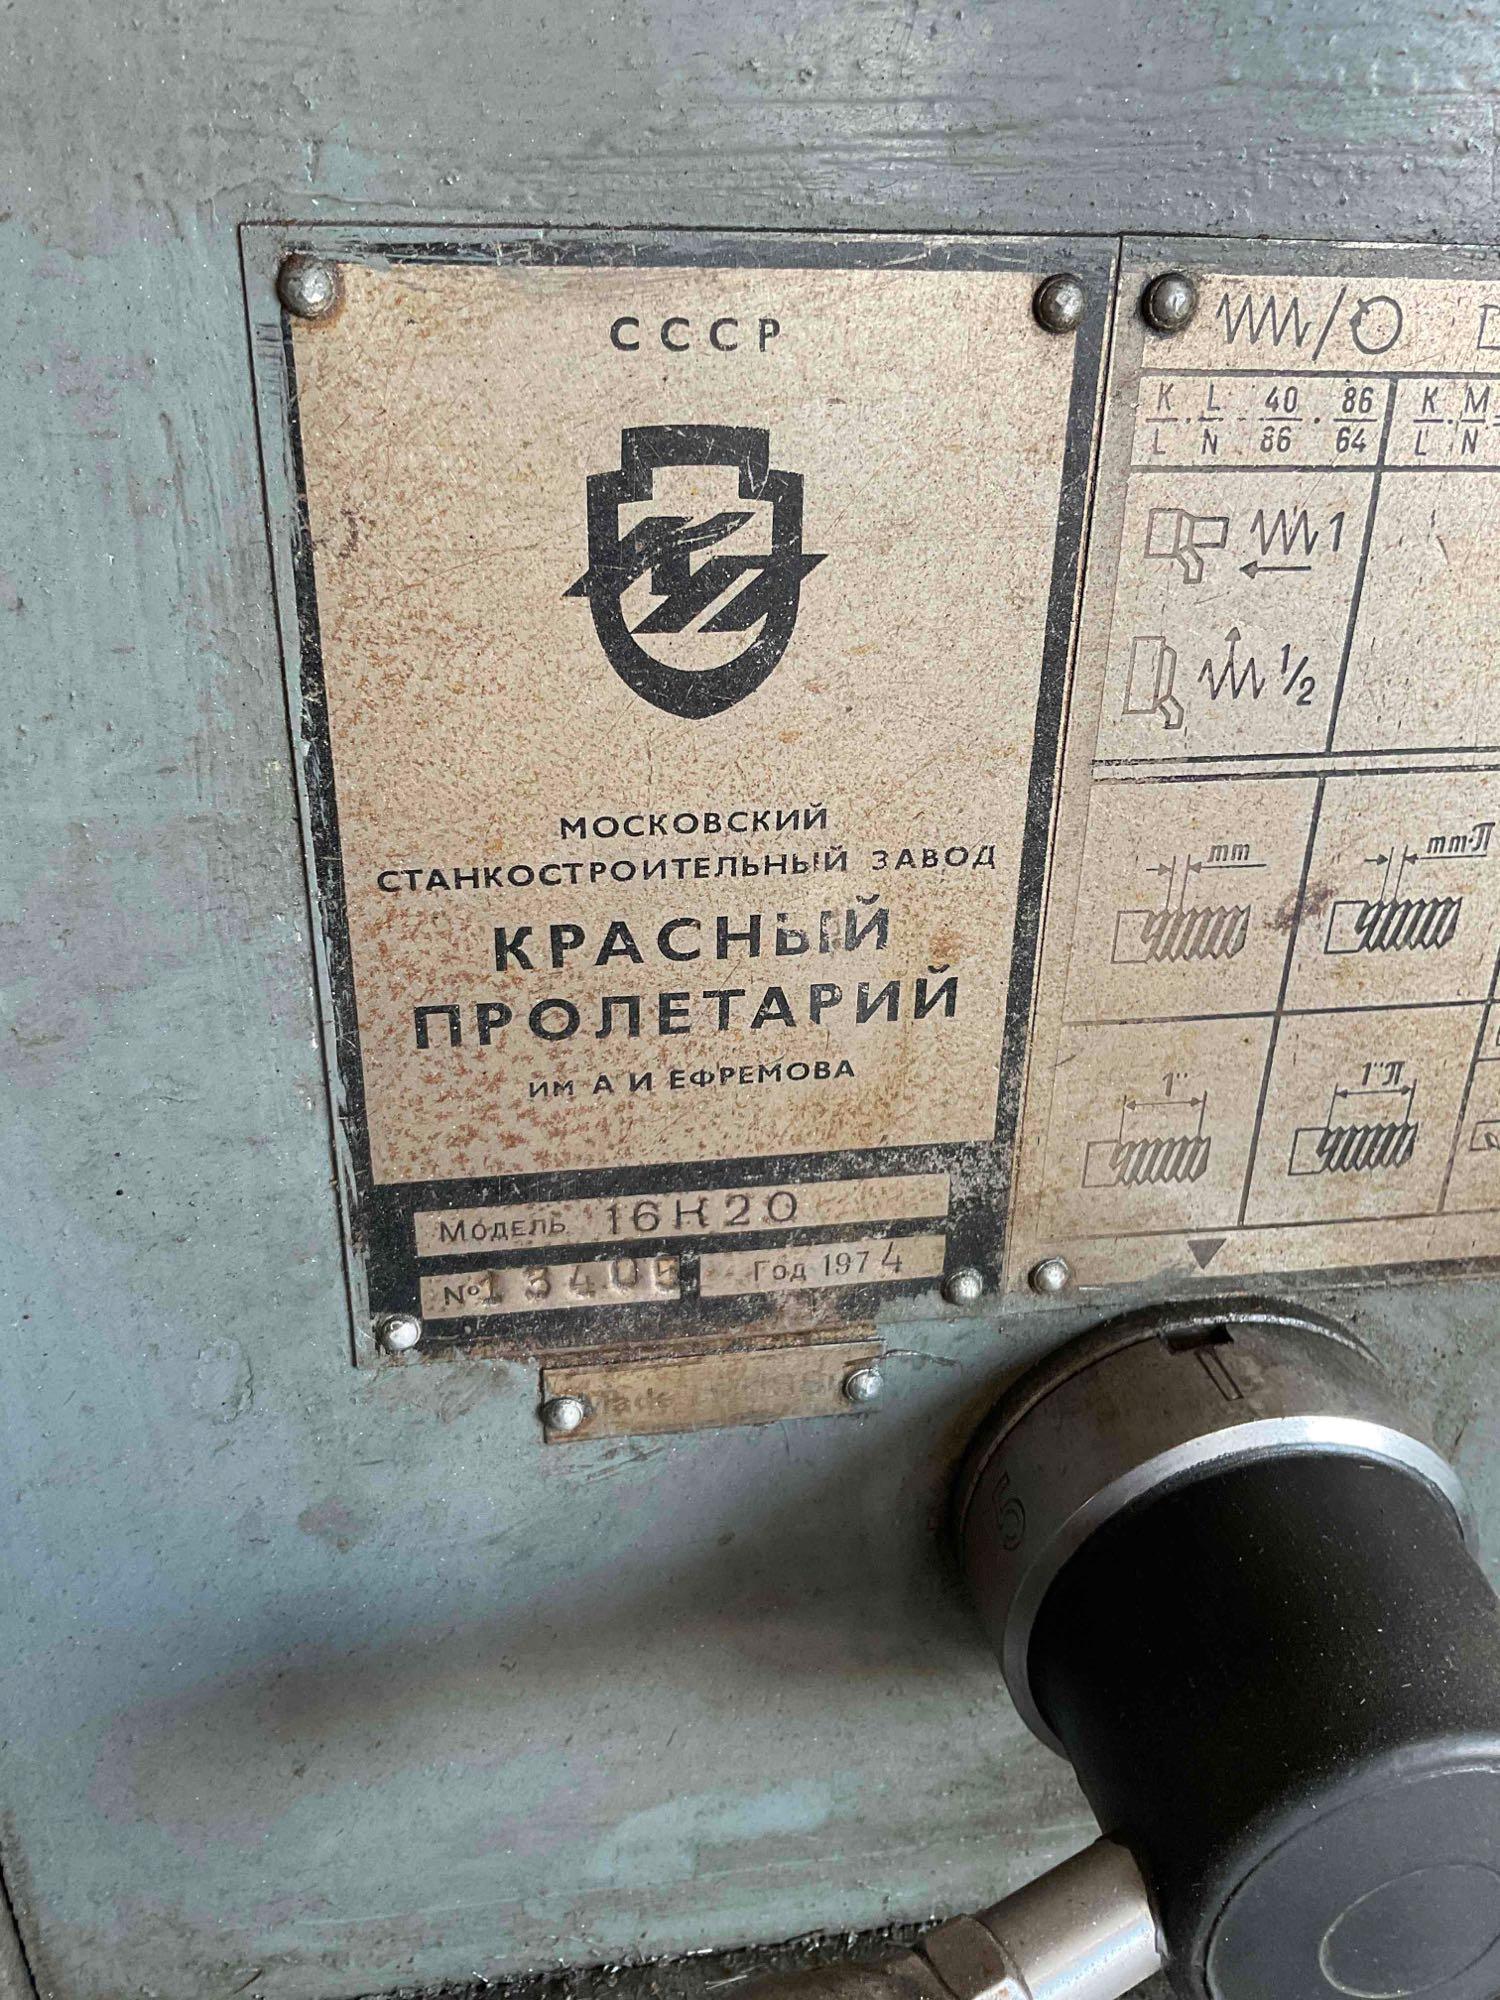 (19003)- Kpachbin 53 inch metal lathe, 3 phase